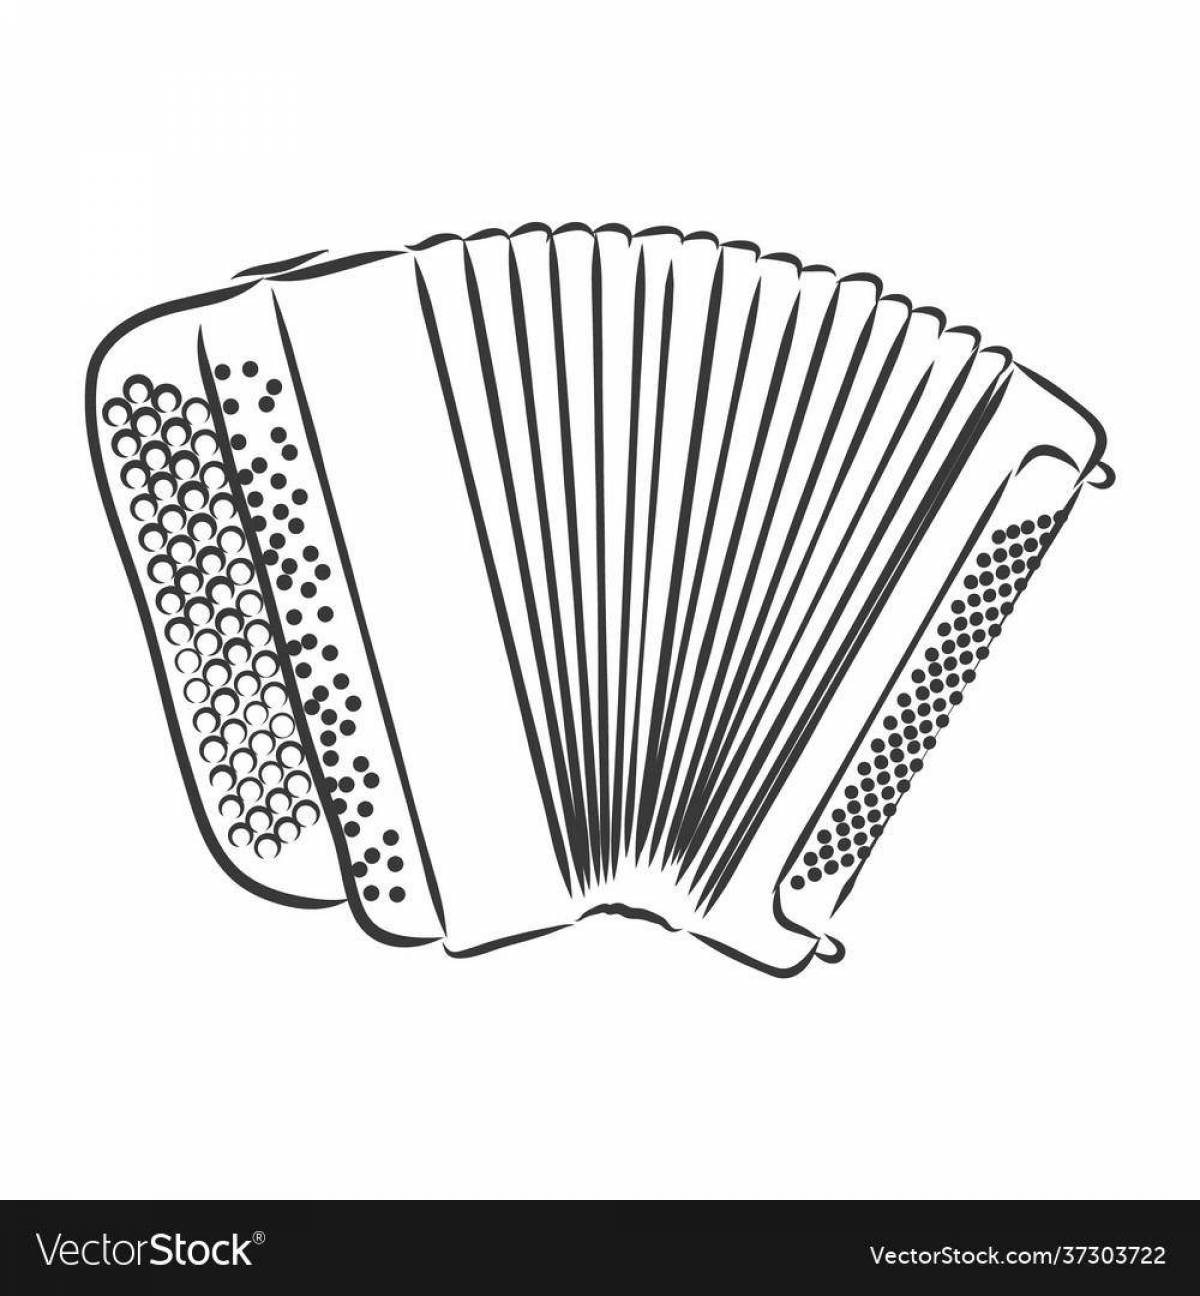 Joyful accordion coloring book